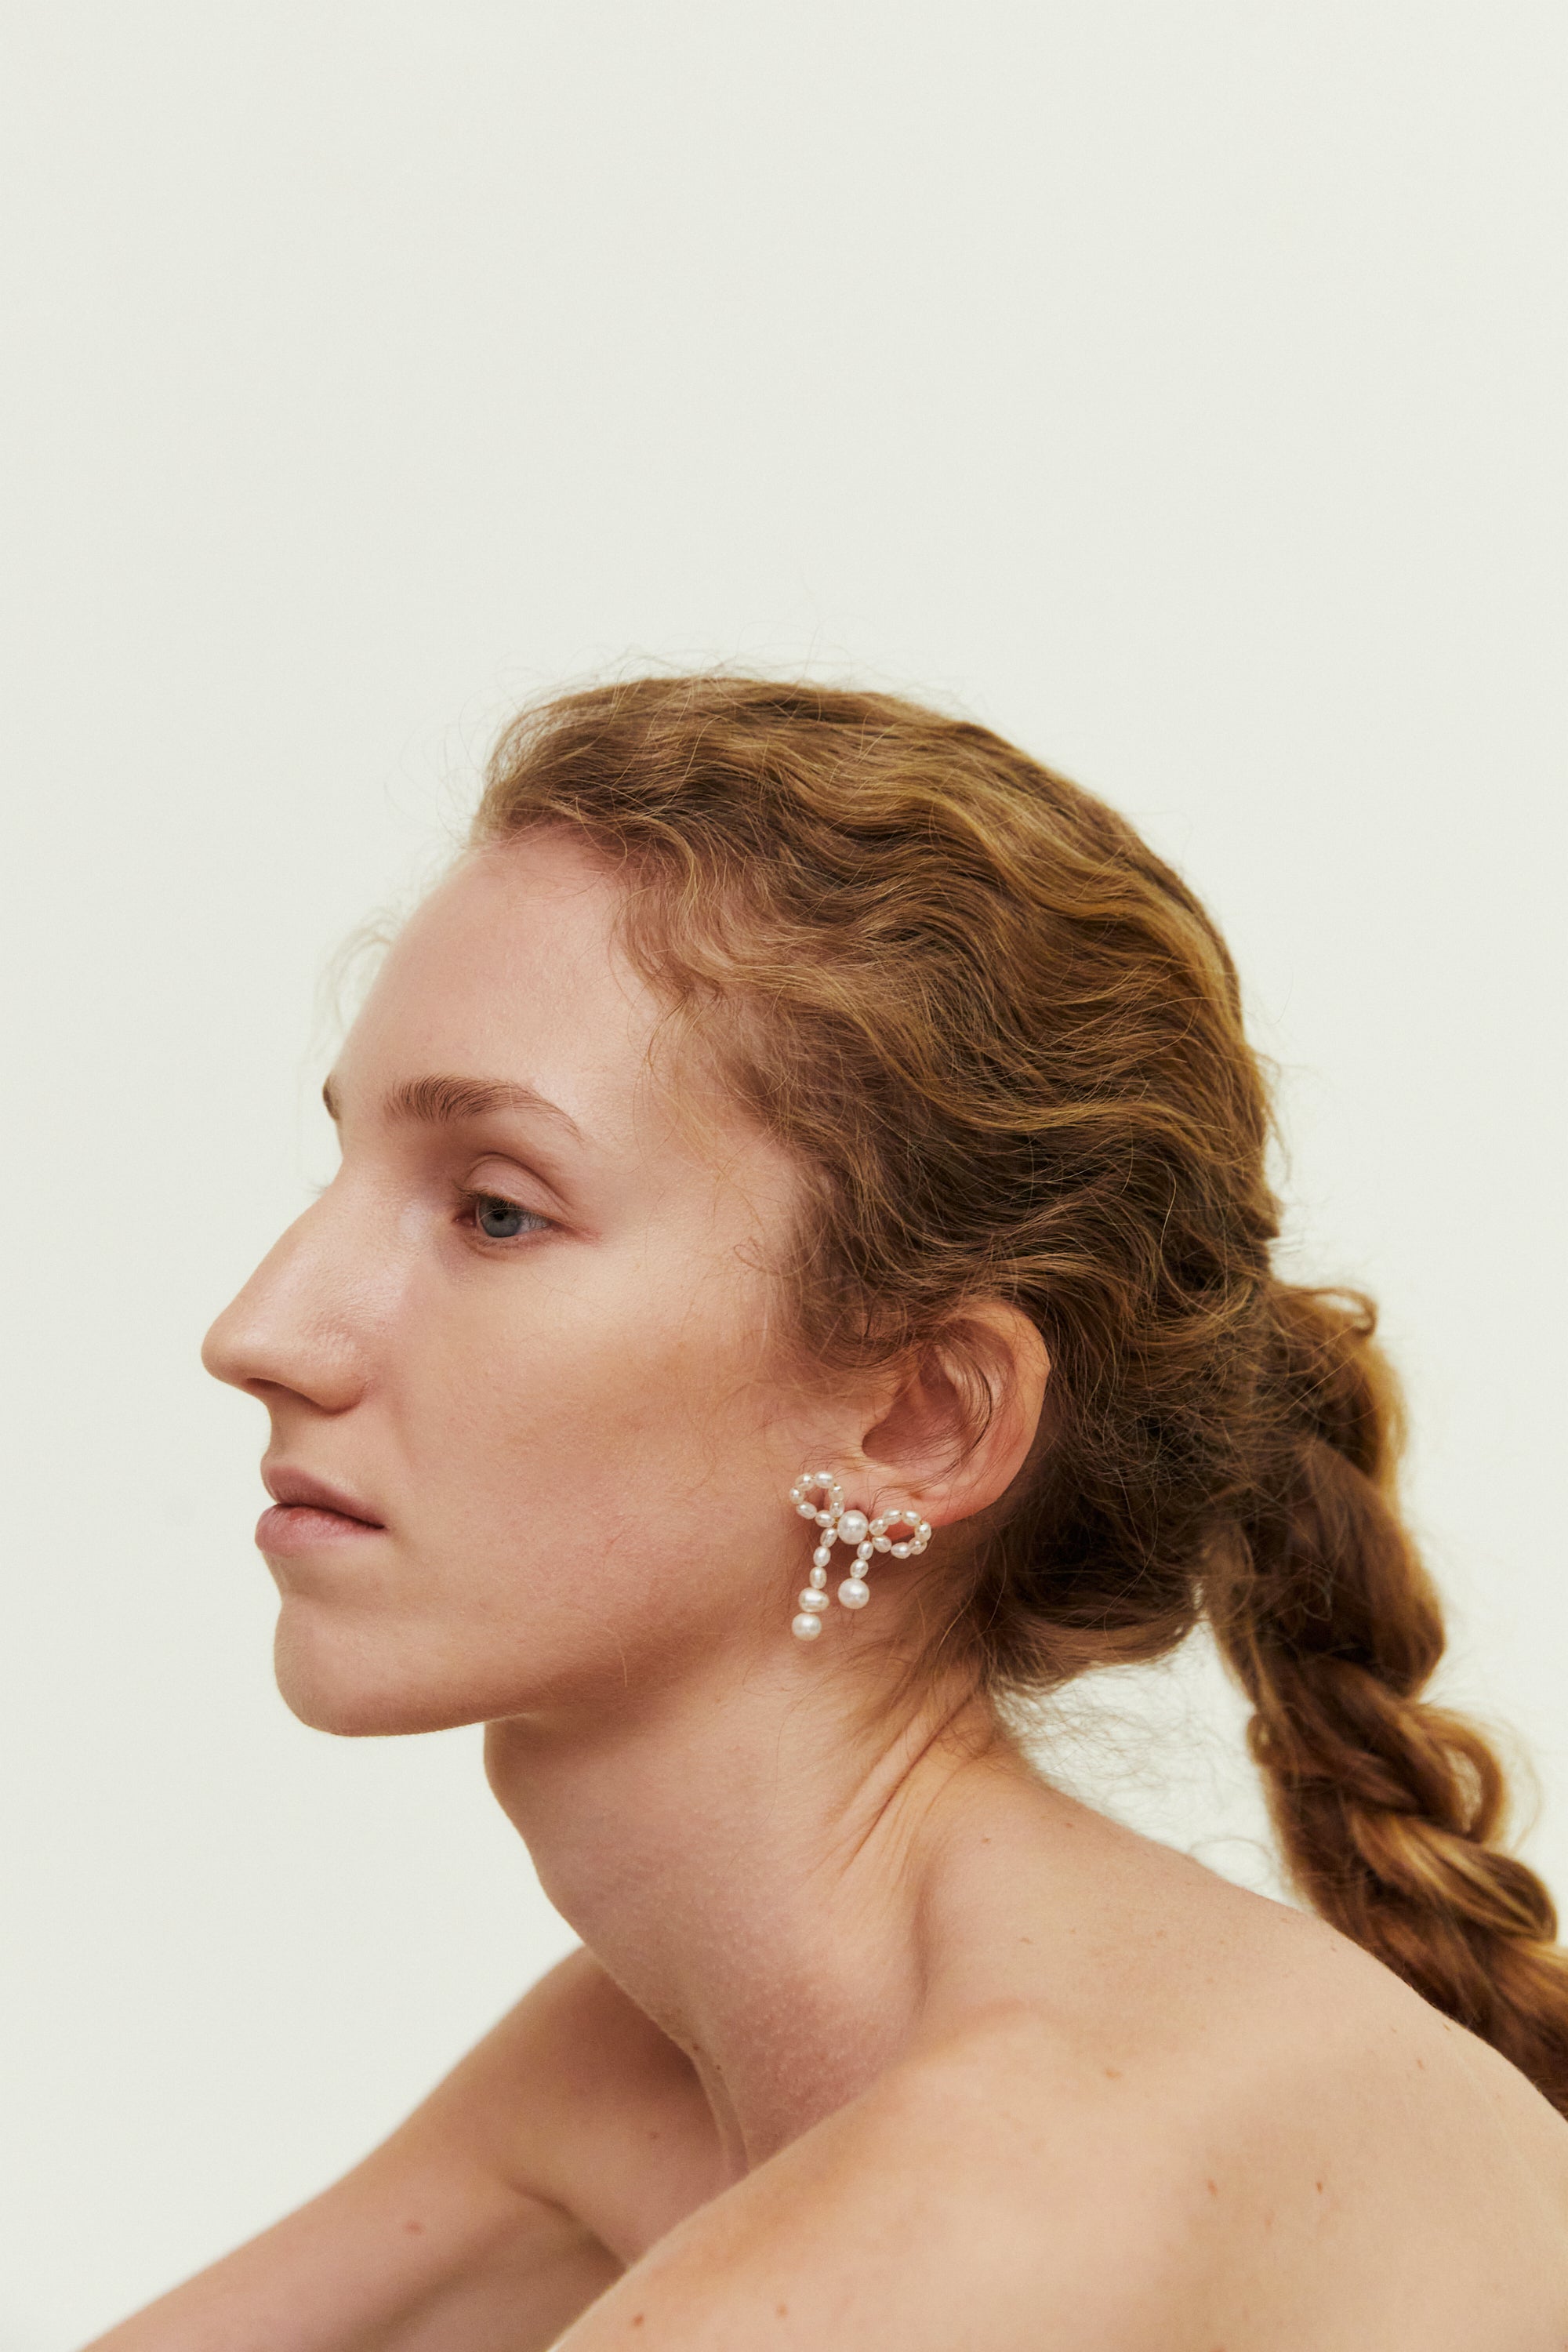 Sarah bow earrings